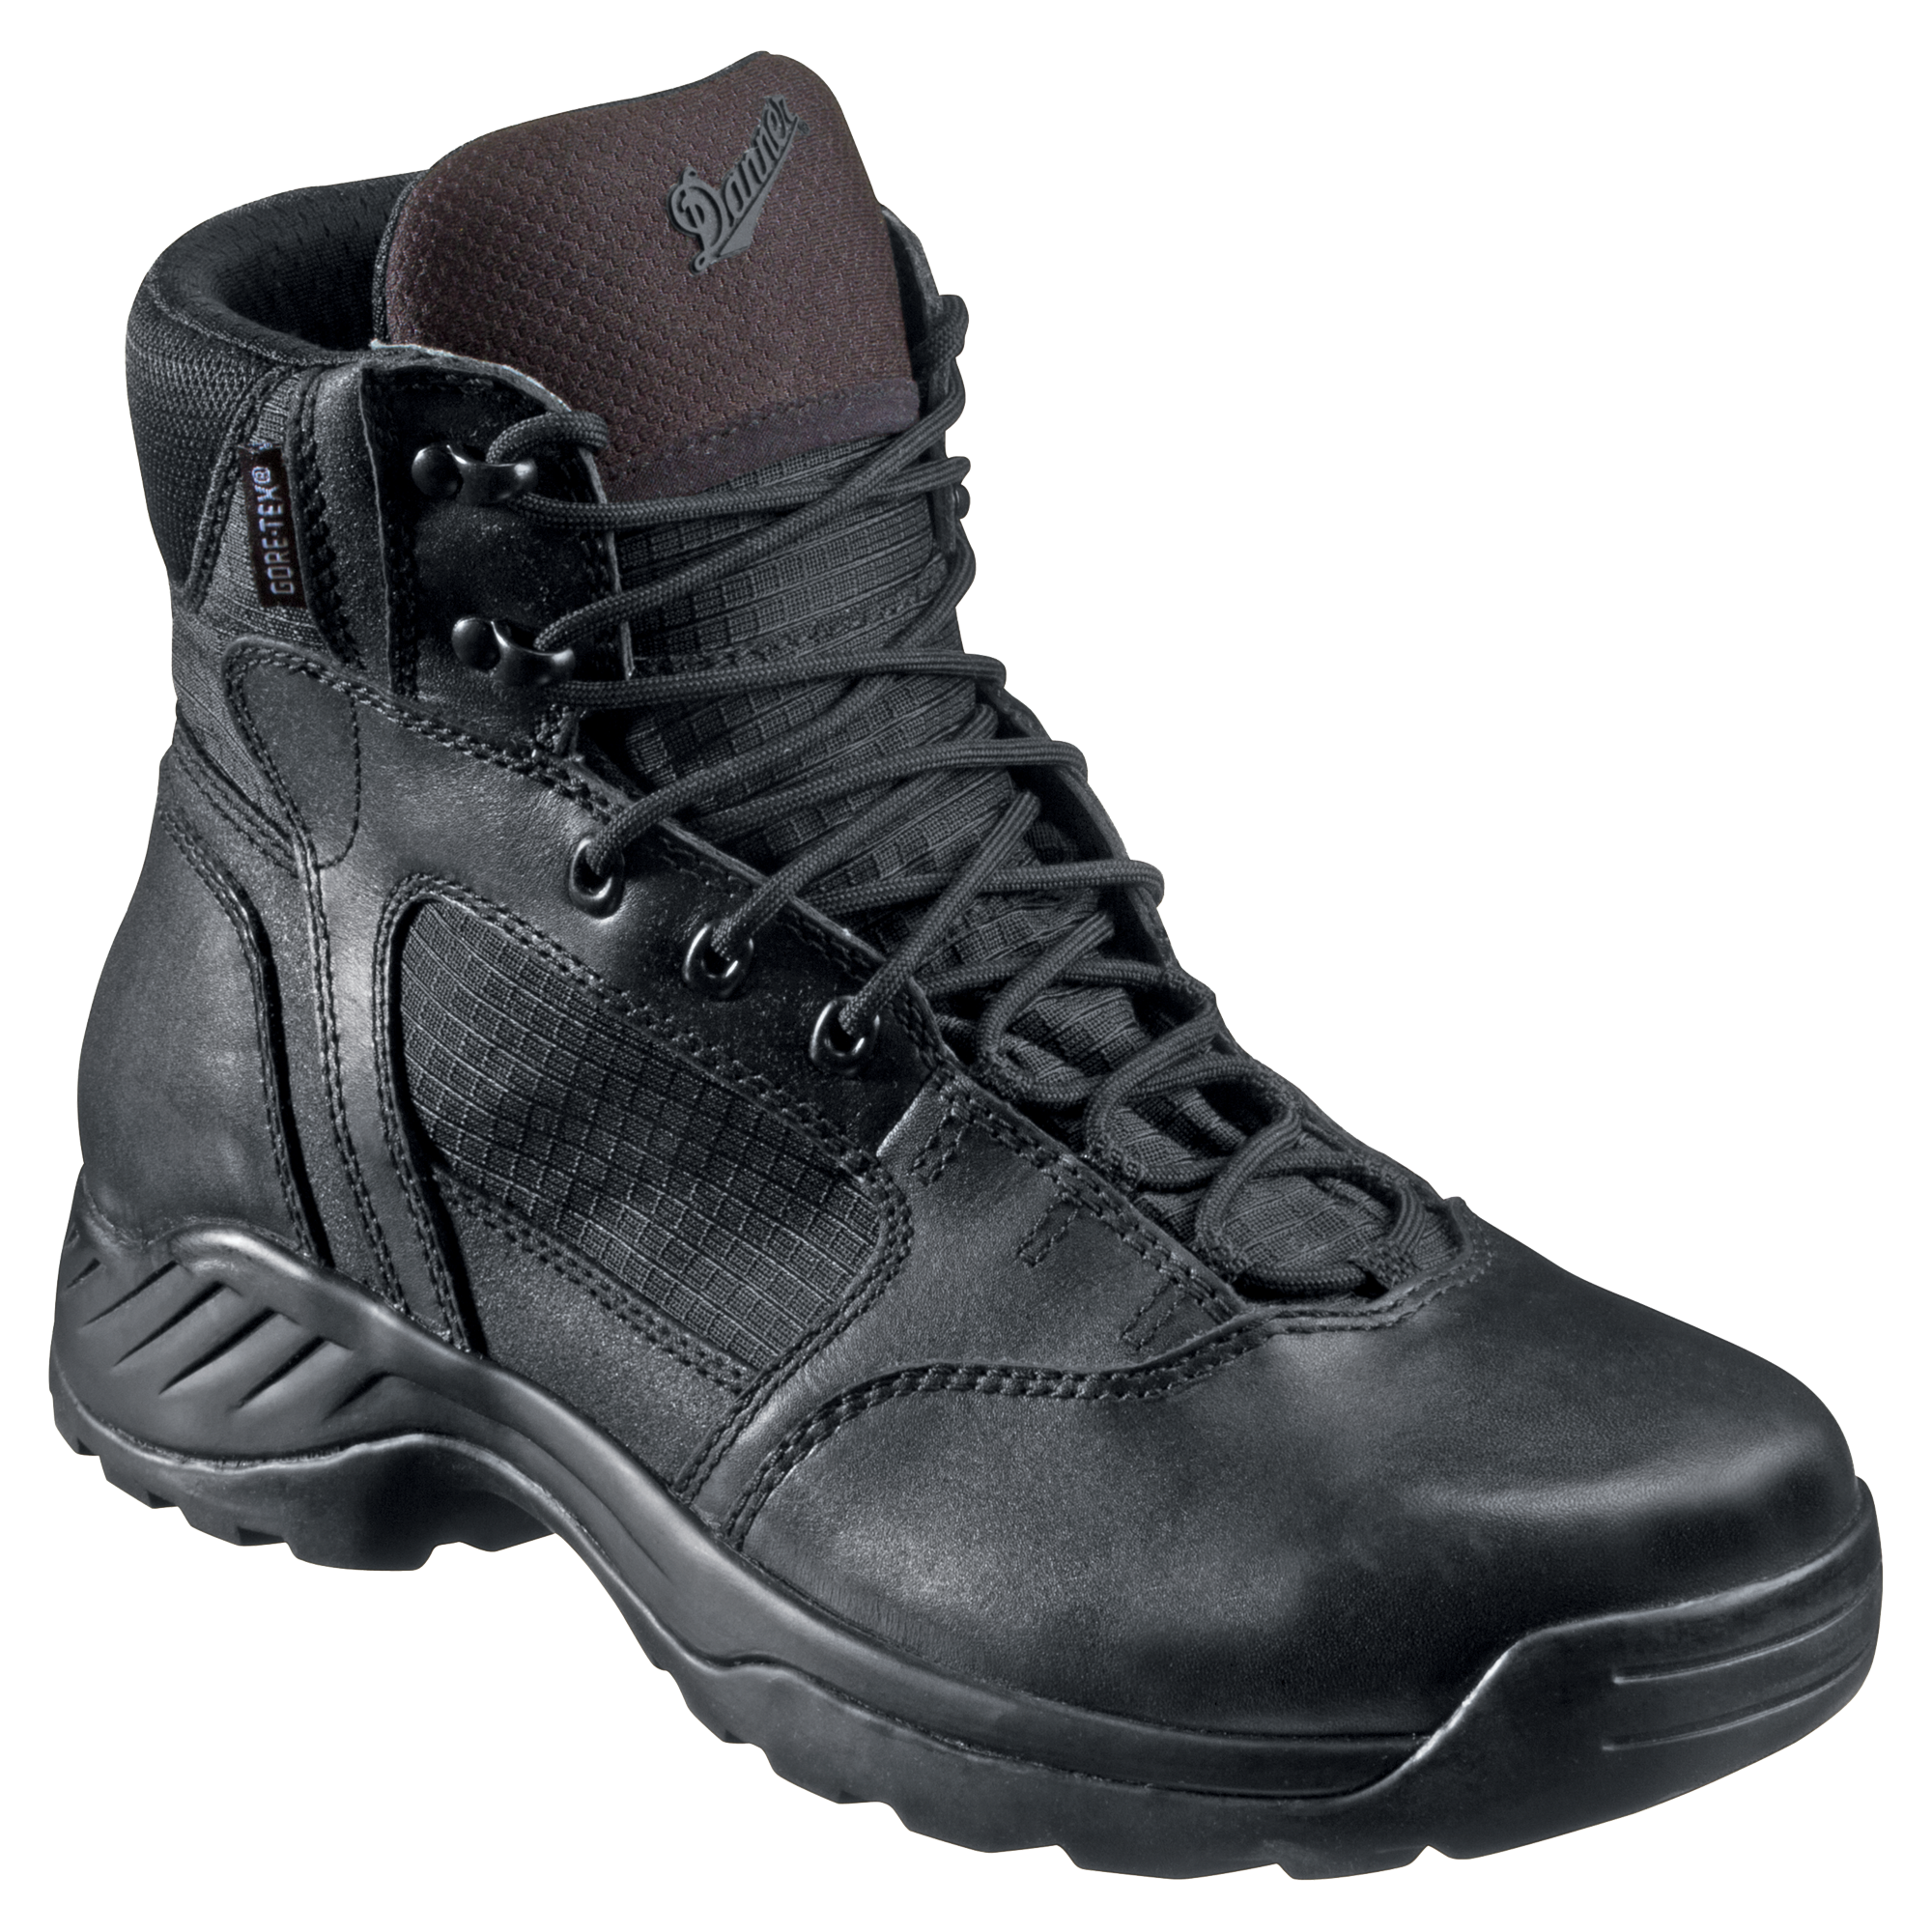 Danner Kinetic Side-Zip GORE-TEX Work Boots for Men - Black - 13M